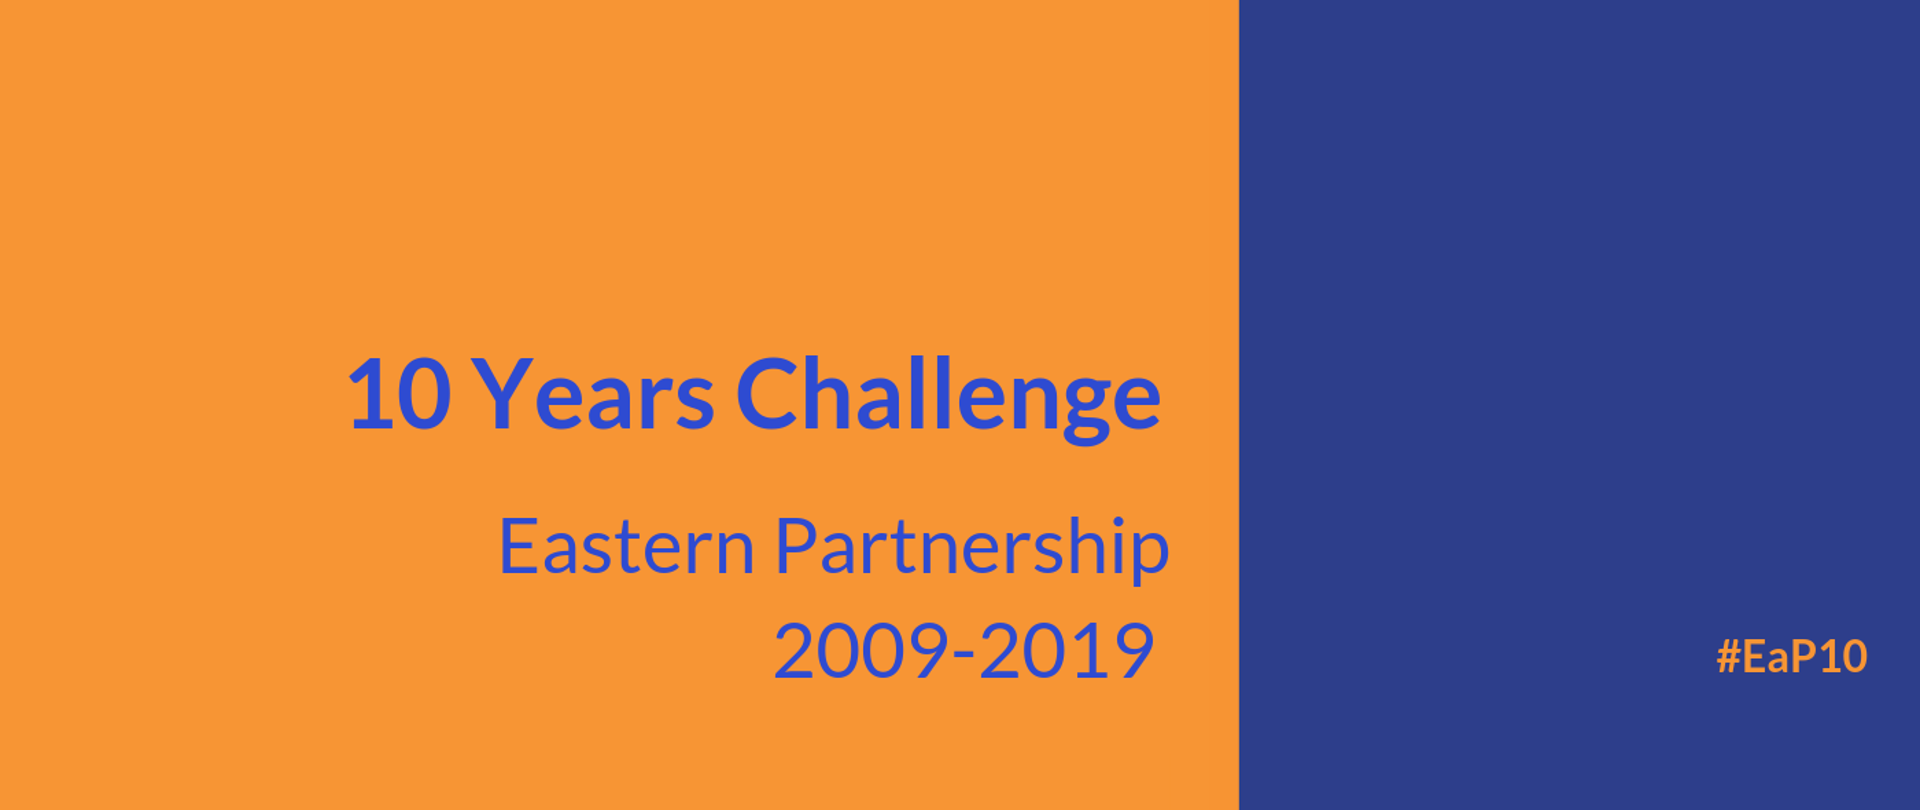 Grafika pomarańczowo-granatowa z napisem 10 years challenge eastern partnership 2009-2019 